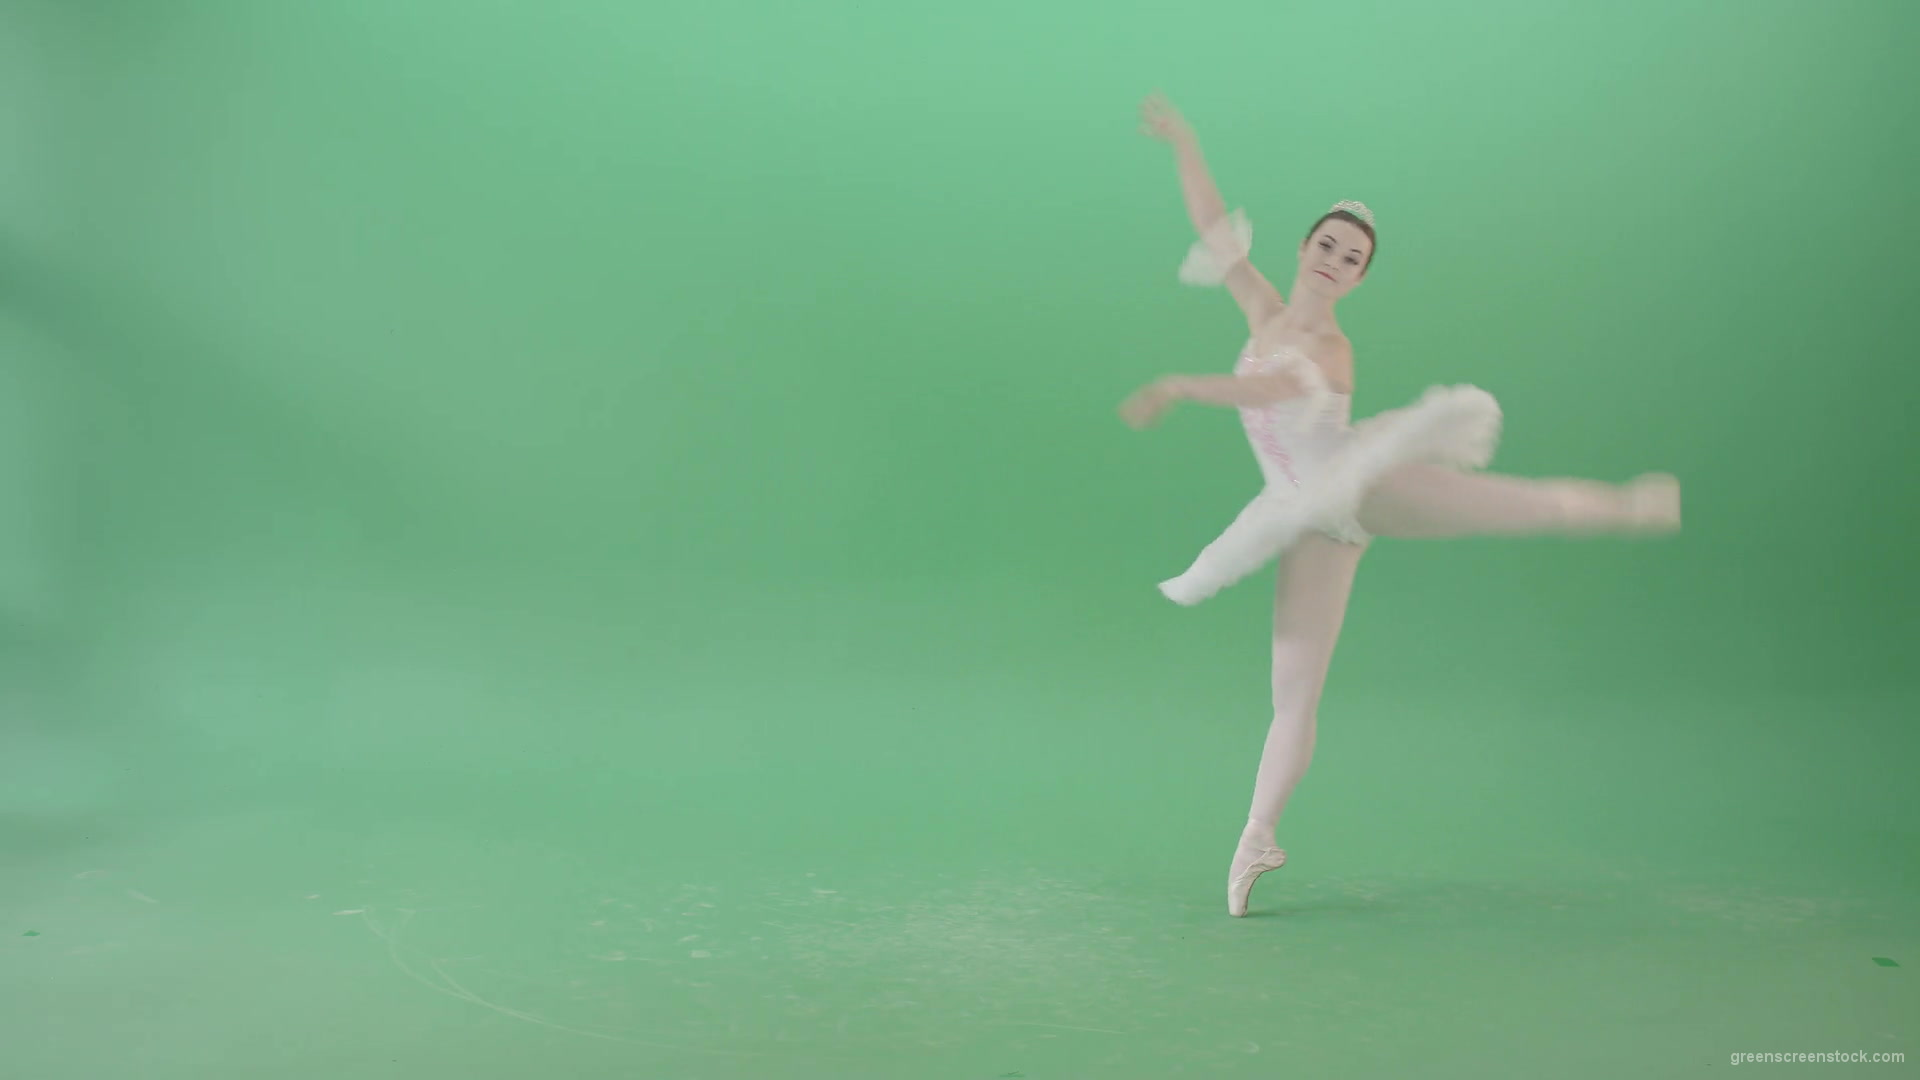 Flexibility-ballet-dancing-performance-girl-dancing-Classical-adagio-opera-on-green-screen-4K-Video-footage-1920_002 Green Screen Stock